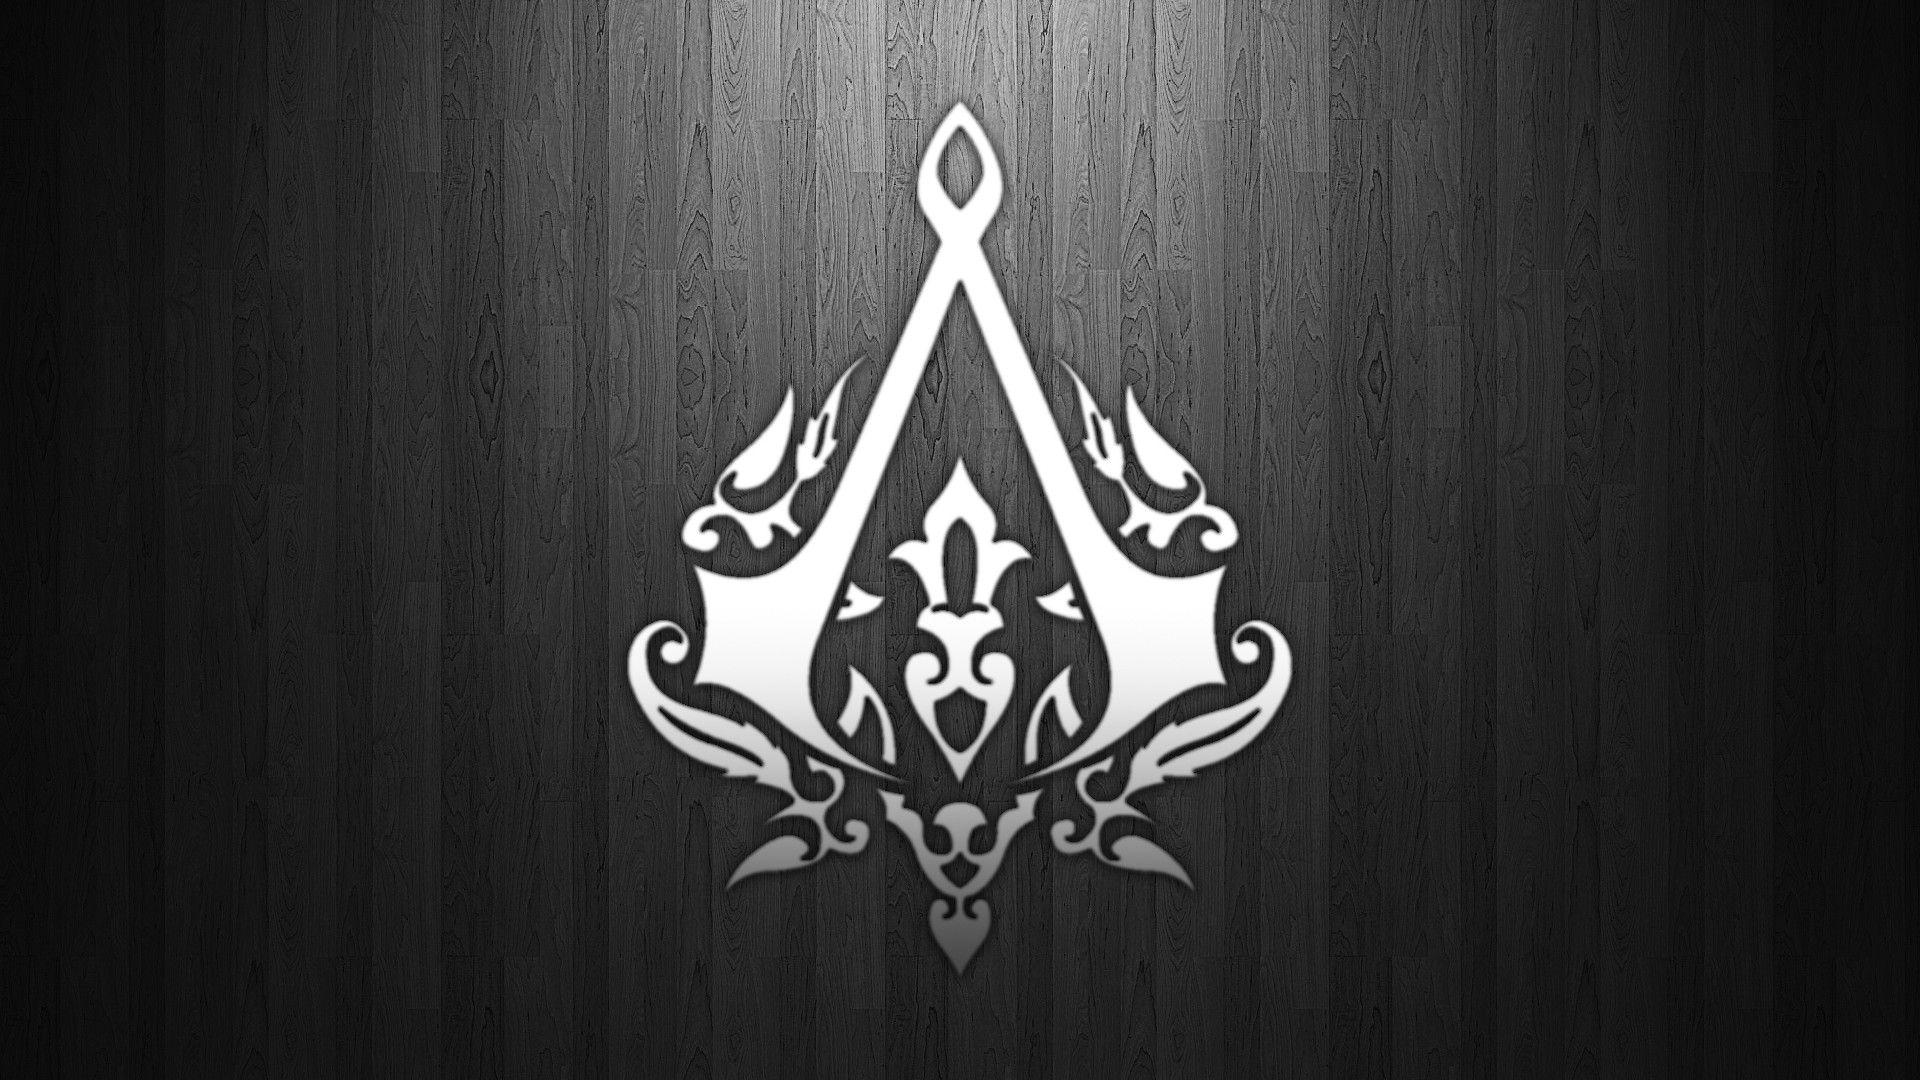 assassins creed logo Wallpapers